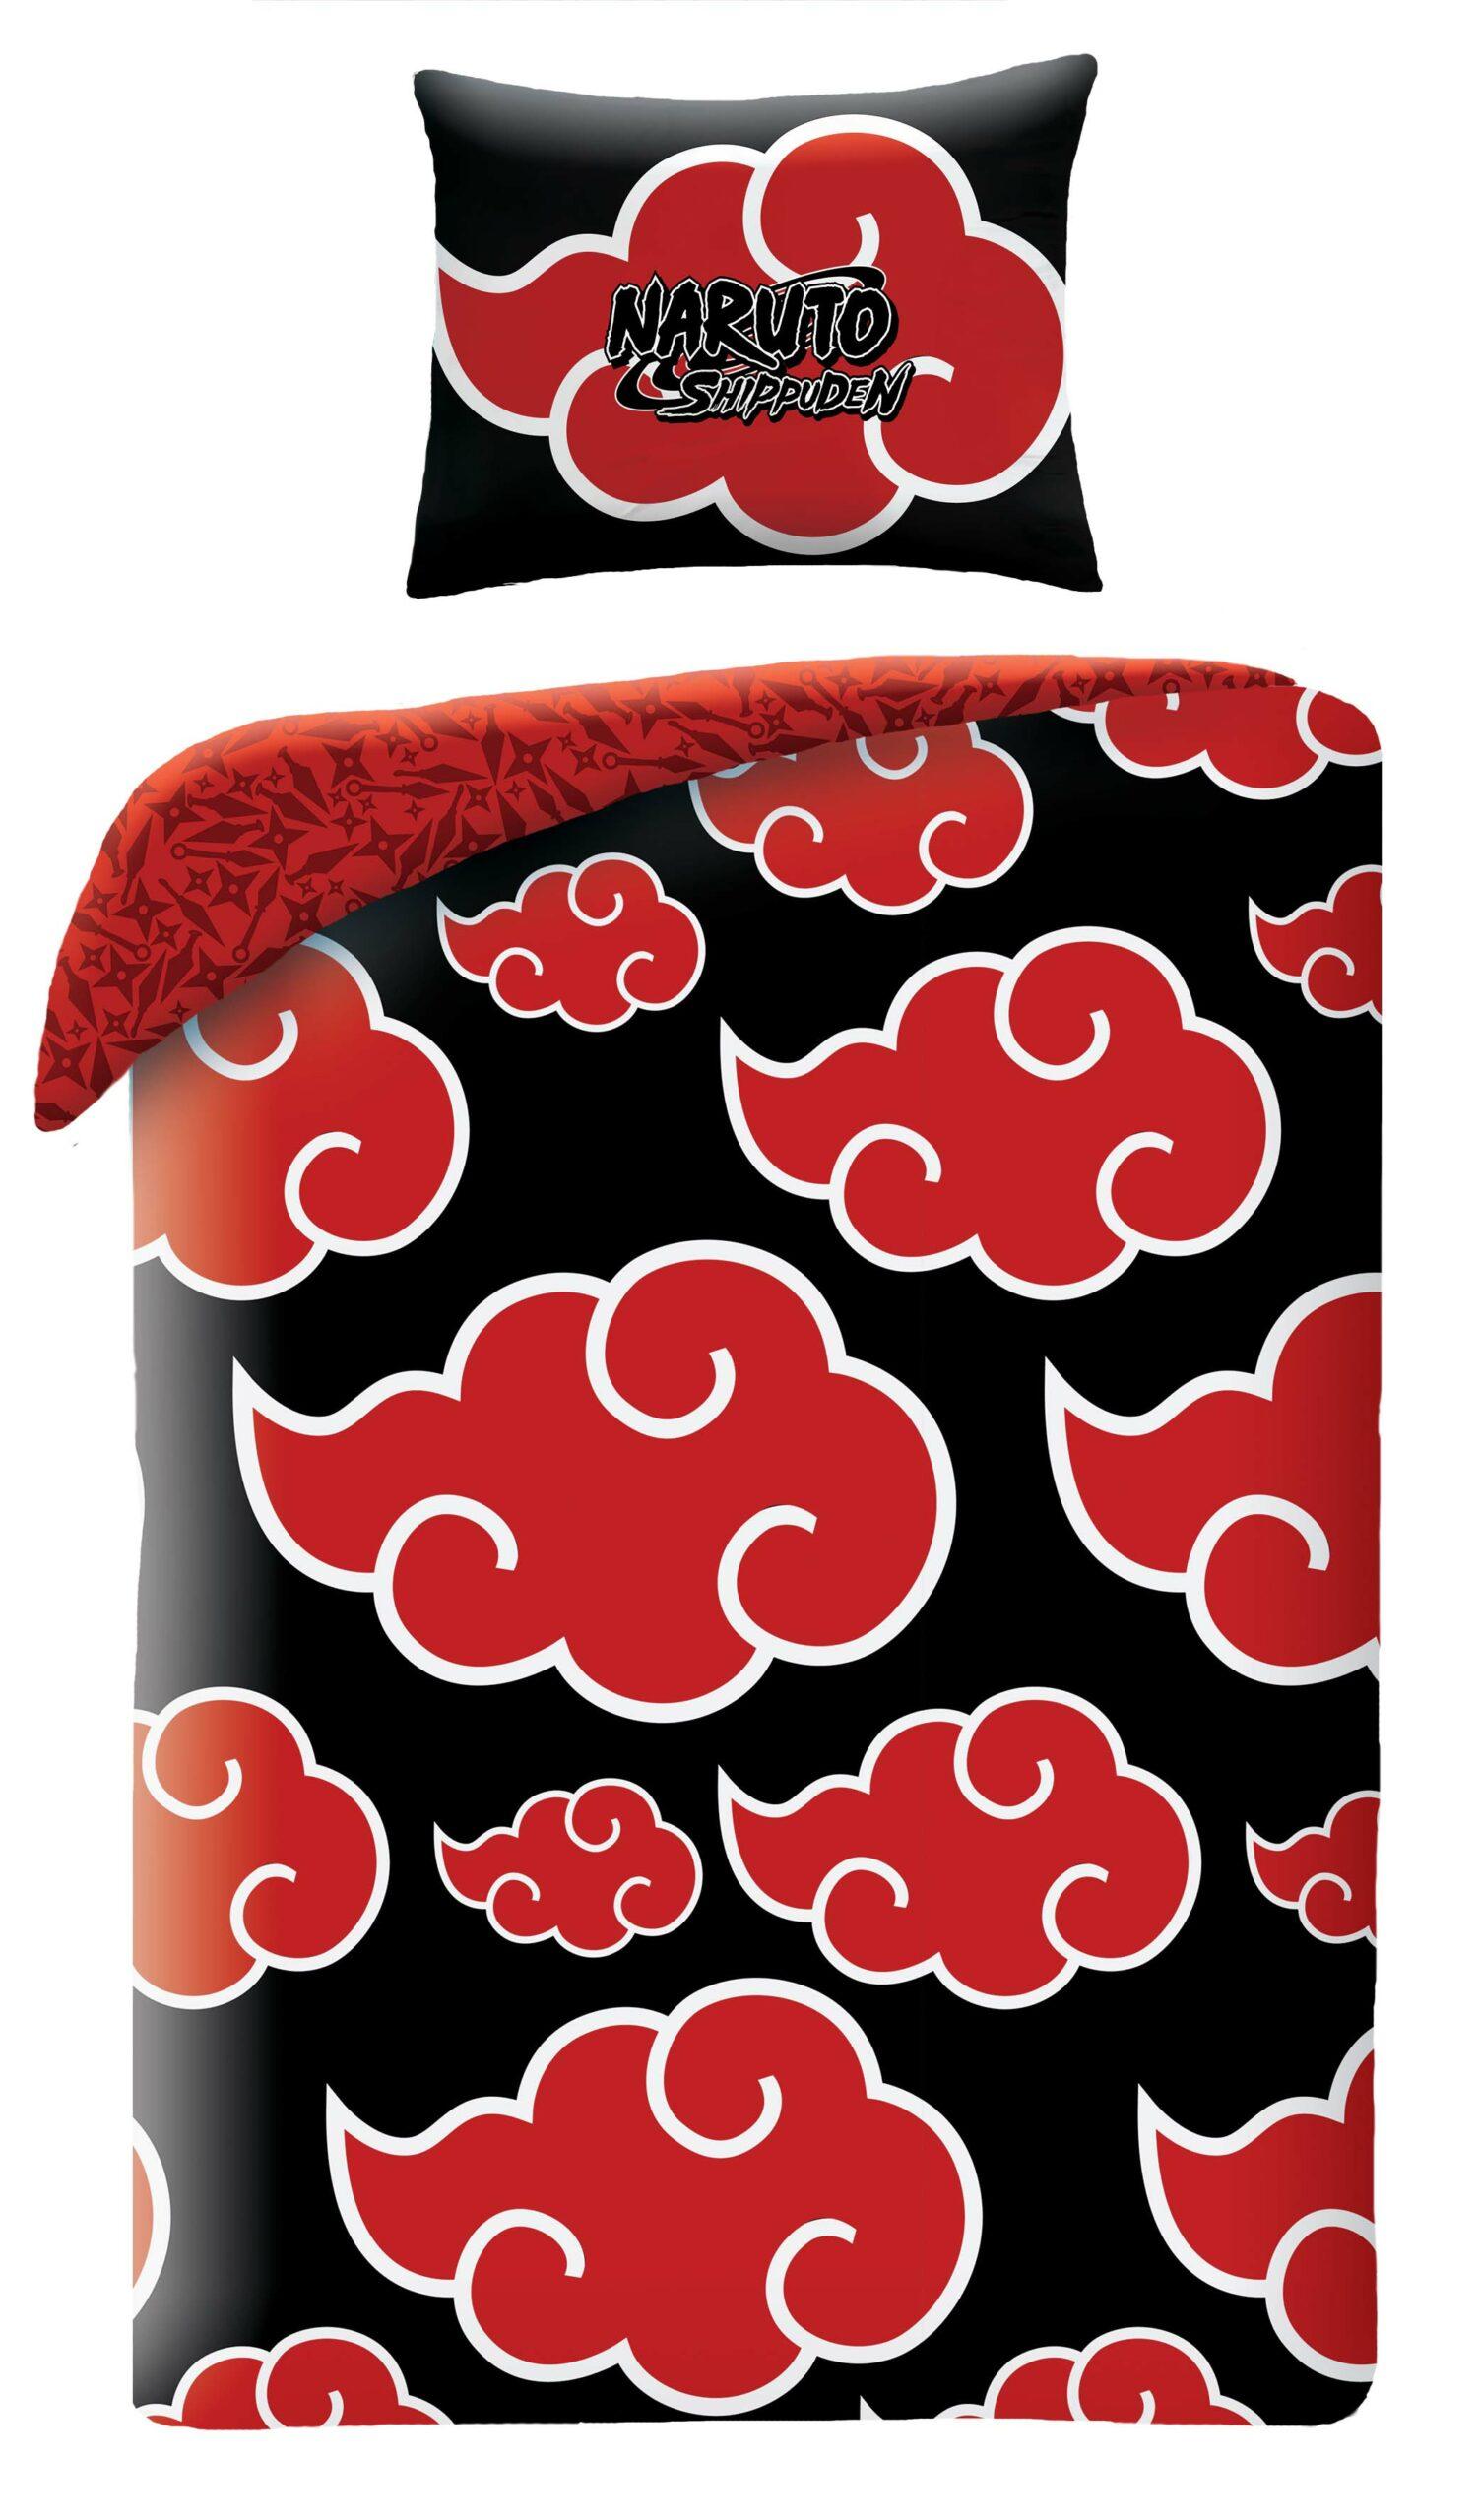 Naruto Dekbedovertrek rood/zwart 140 x 200 cm Katoen 70 x 90 cm